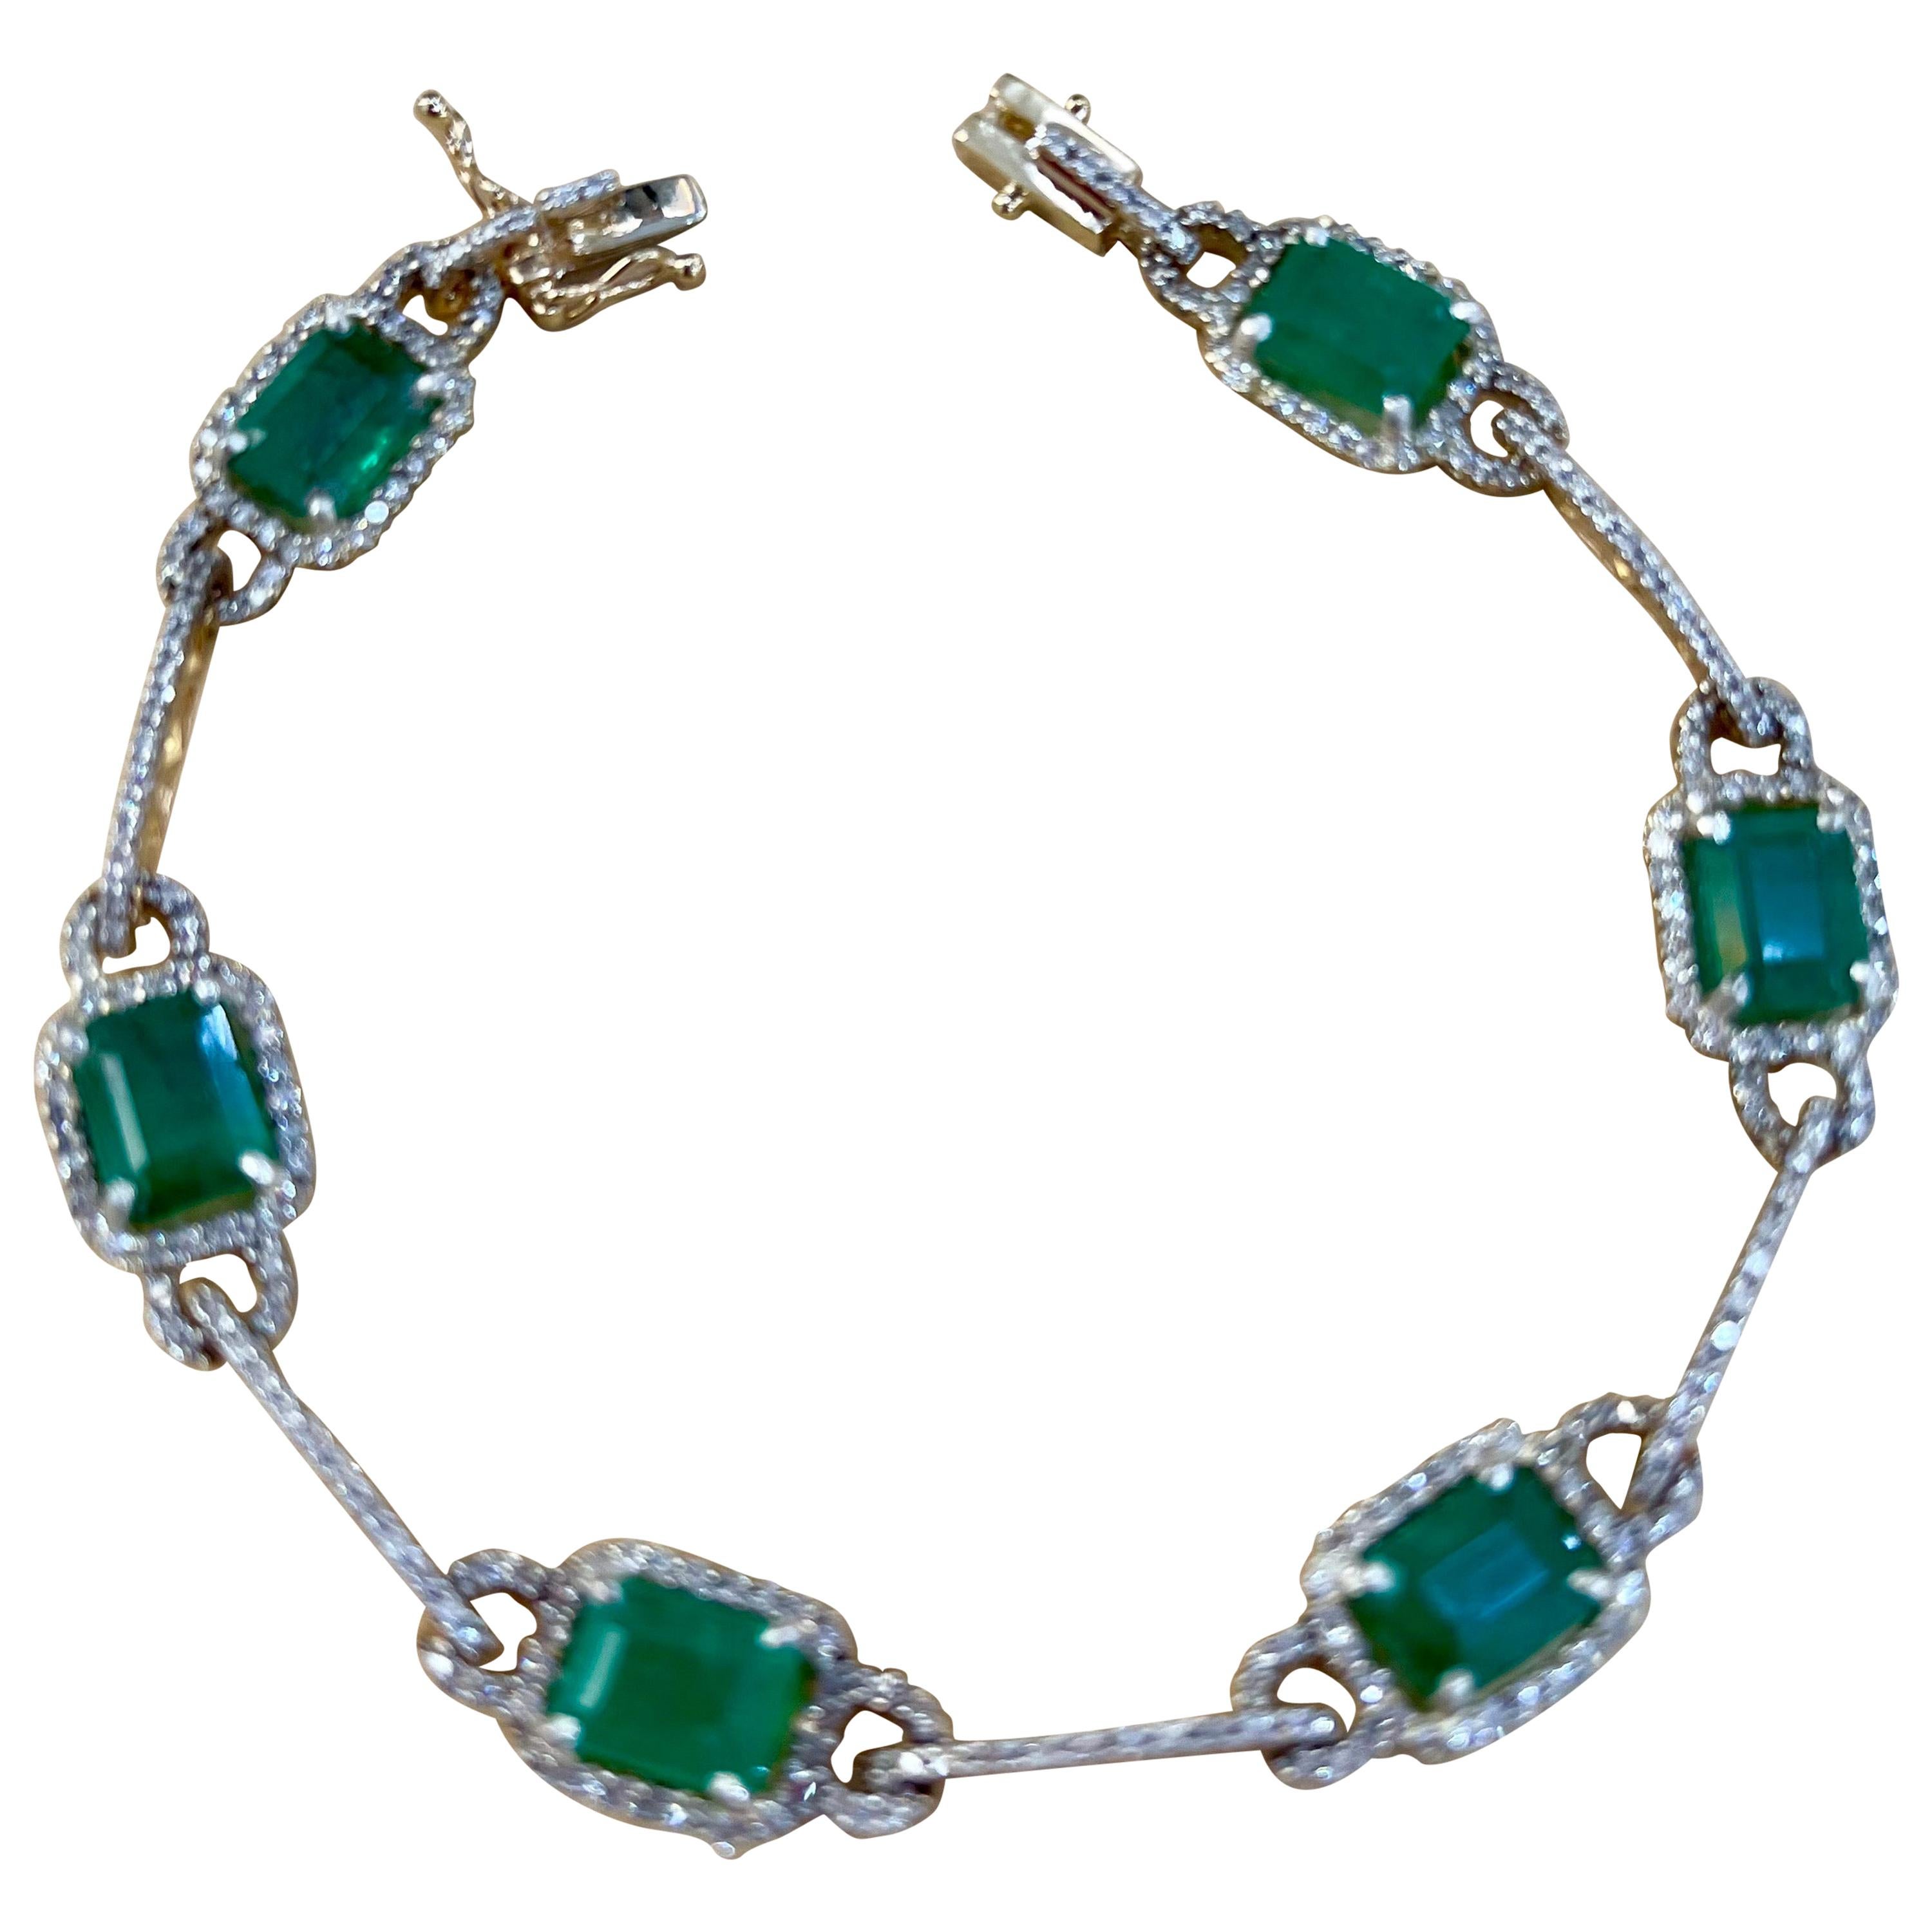 12 Carat Natural Brazil Emerald & 2.5 Ct Diamond Tennis Bracelet 14 Karat Y Gold